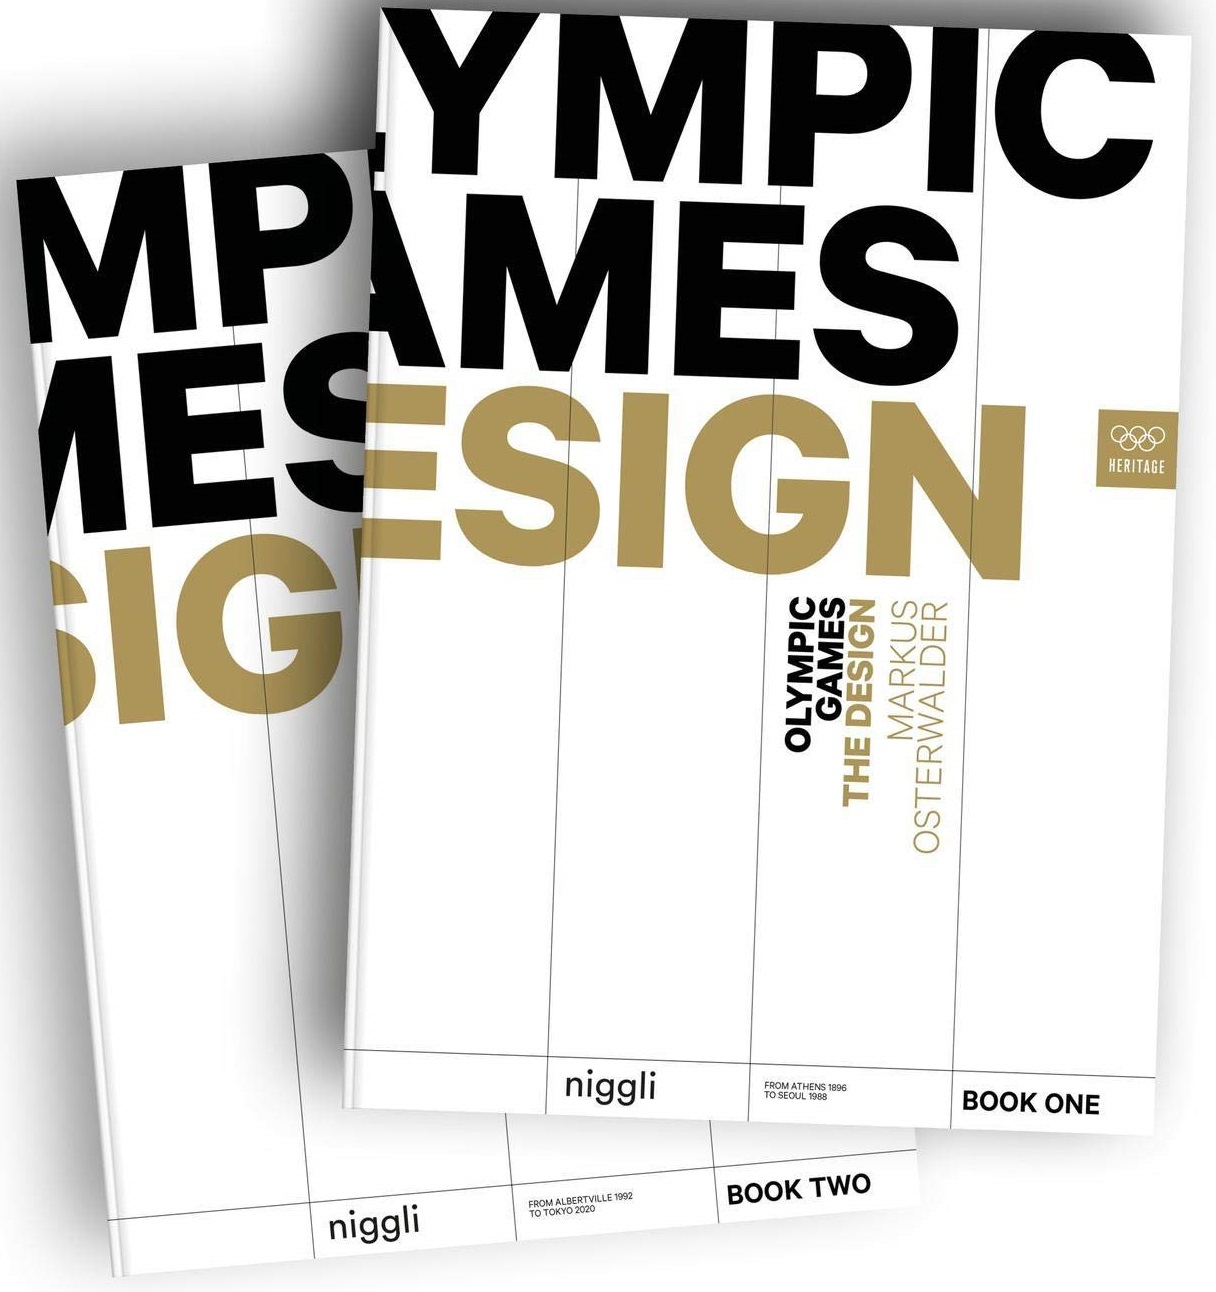 Olympic Games: The Design | Markus Osterwalder